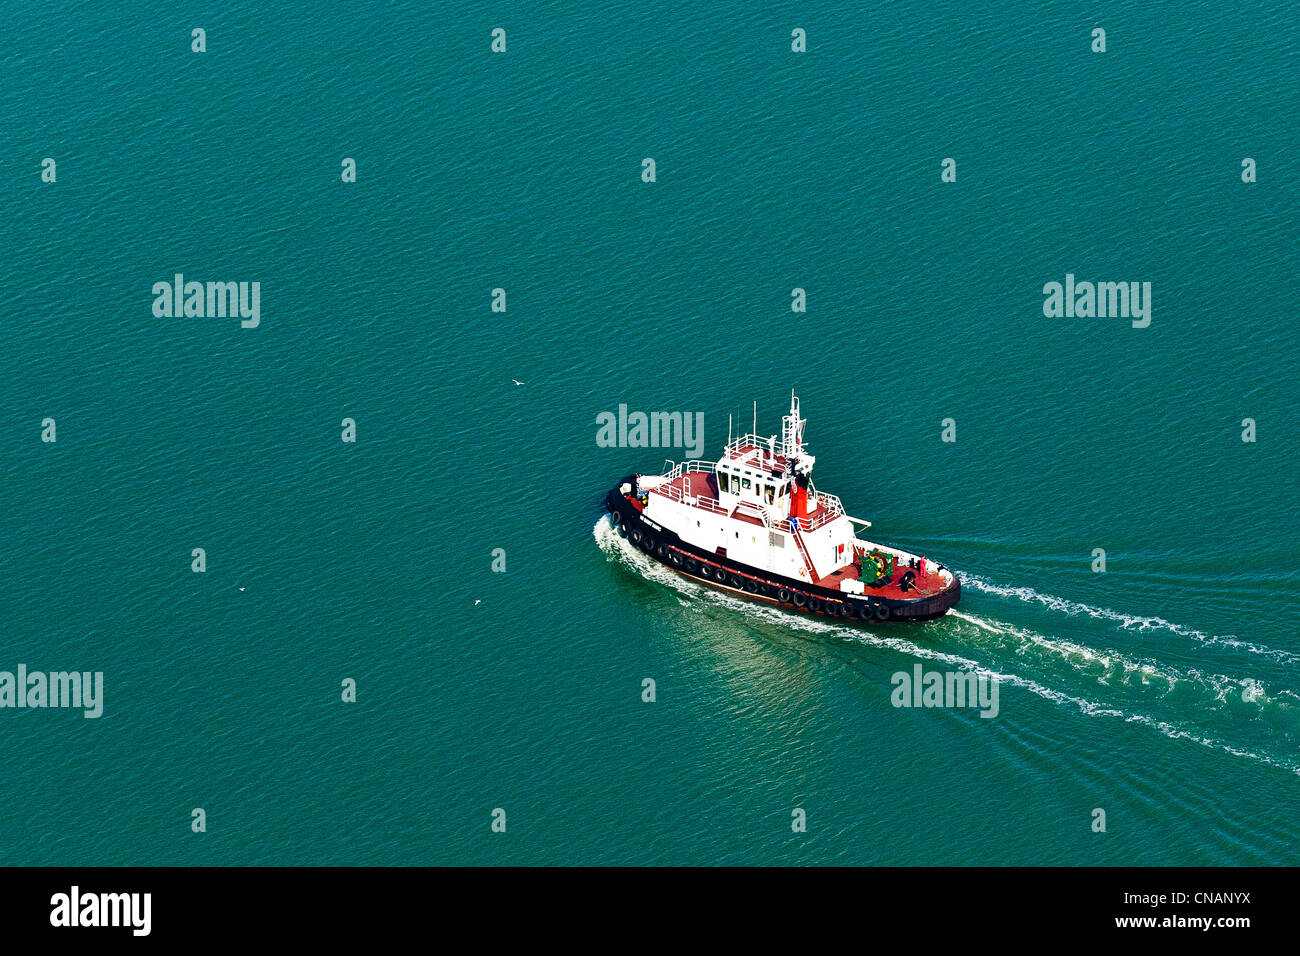 France, Loire-Atlantique, Saint-Nazaire, tug boat (aerial photography) Stock Photo